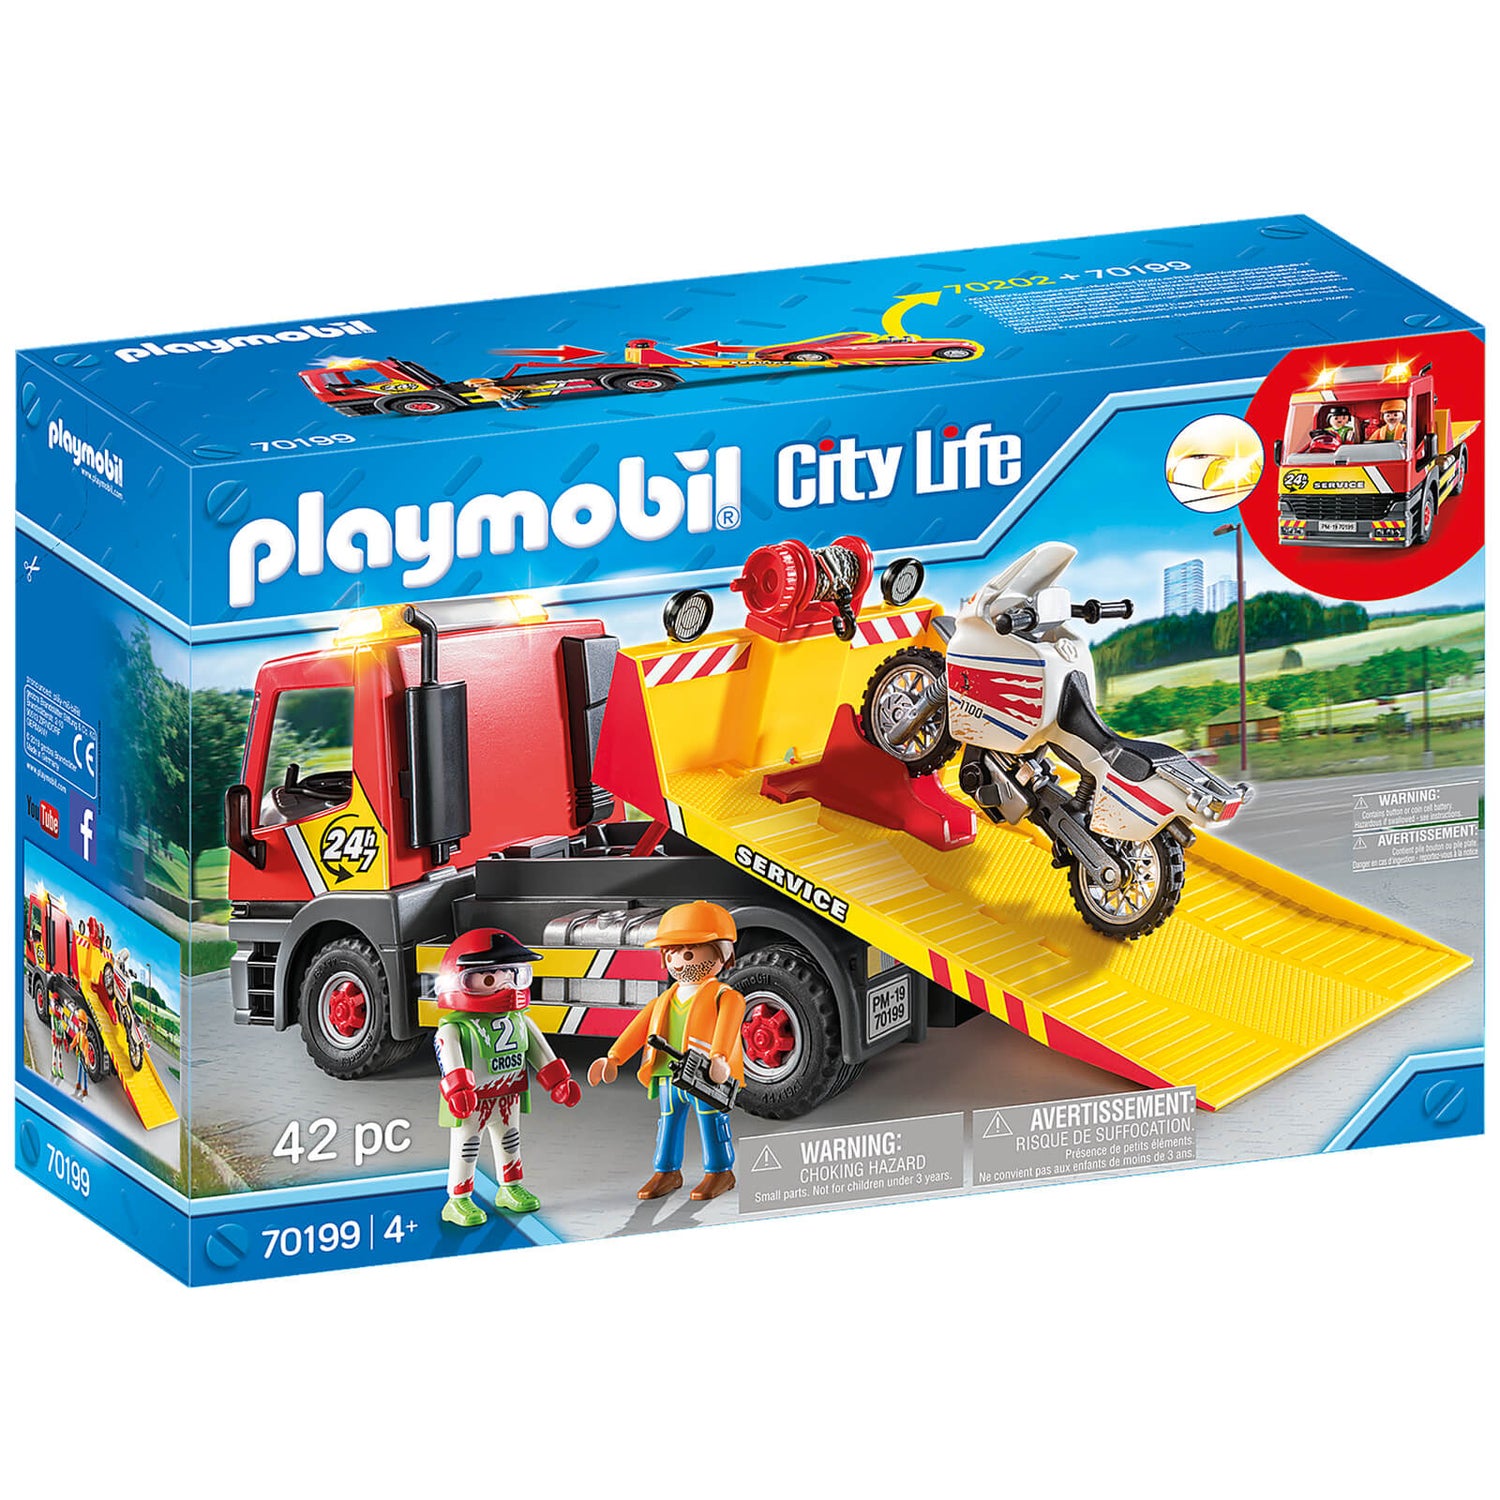 Tak for din hjælp Perth Lamme Playmobil City Life Towing Service (70199) Toys - Zavvi (日本)